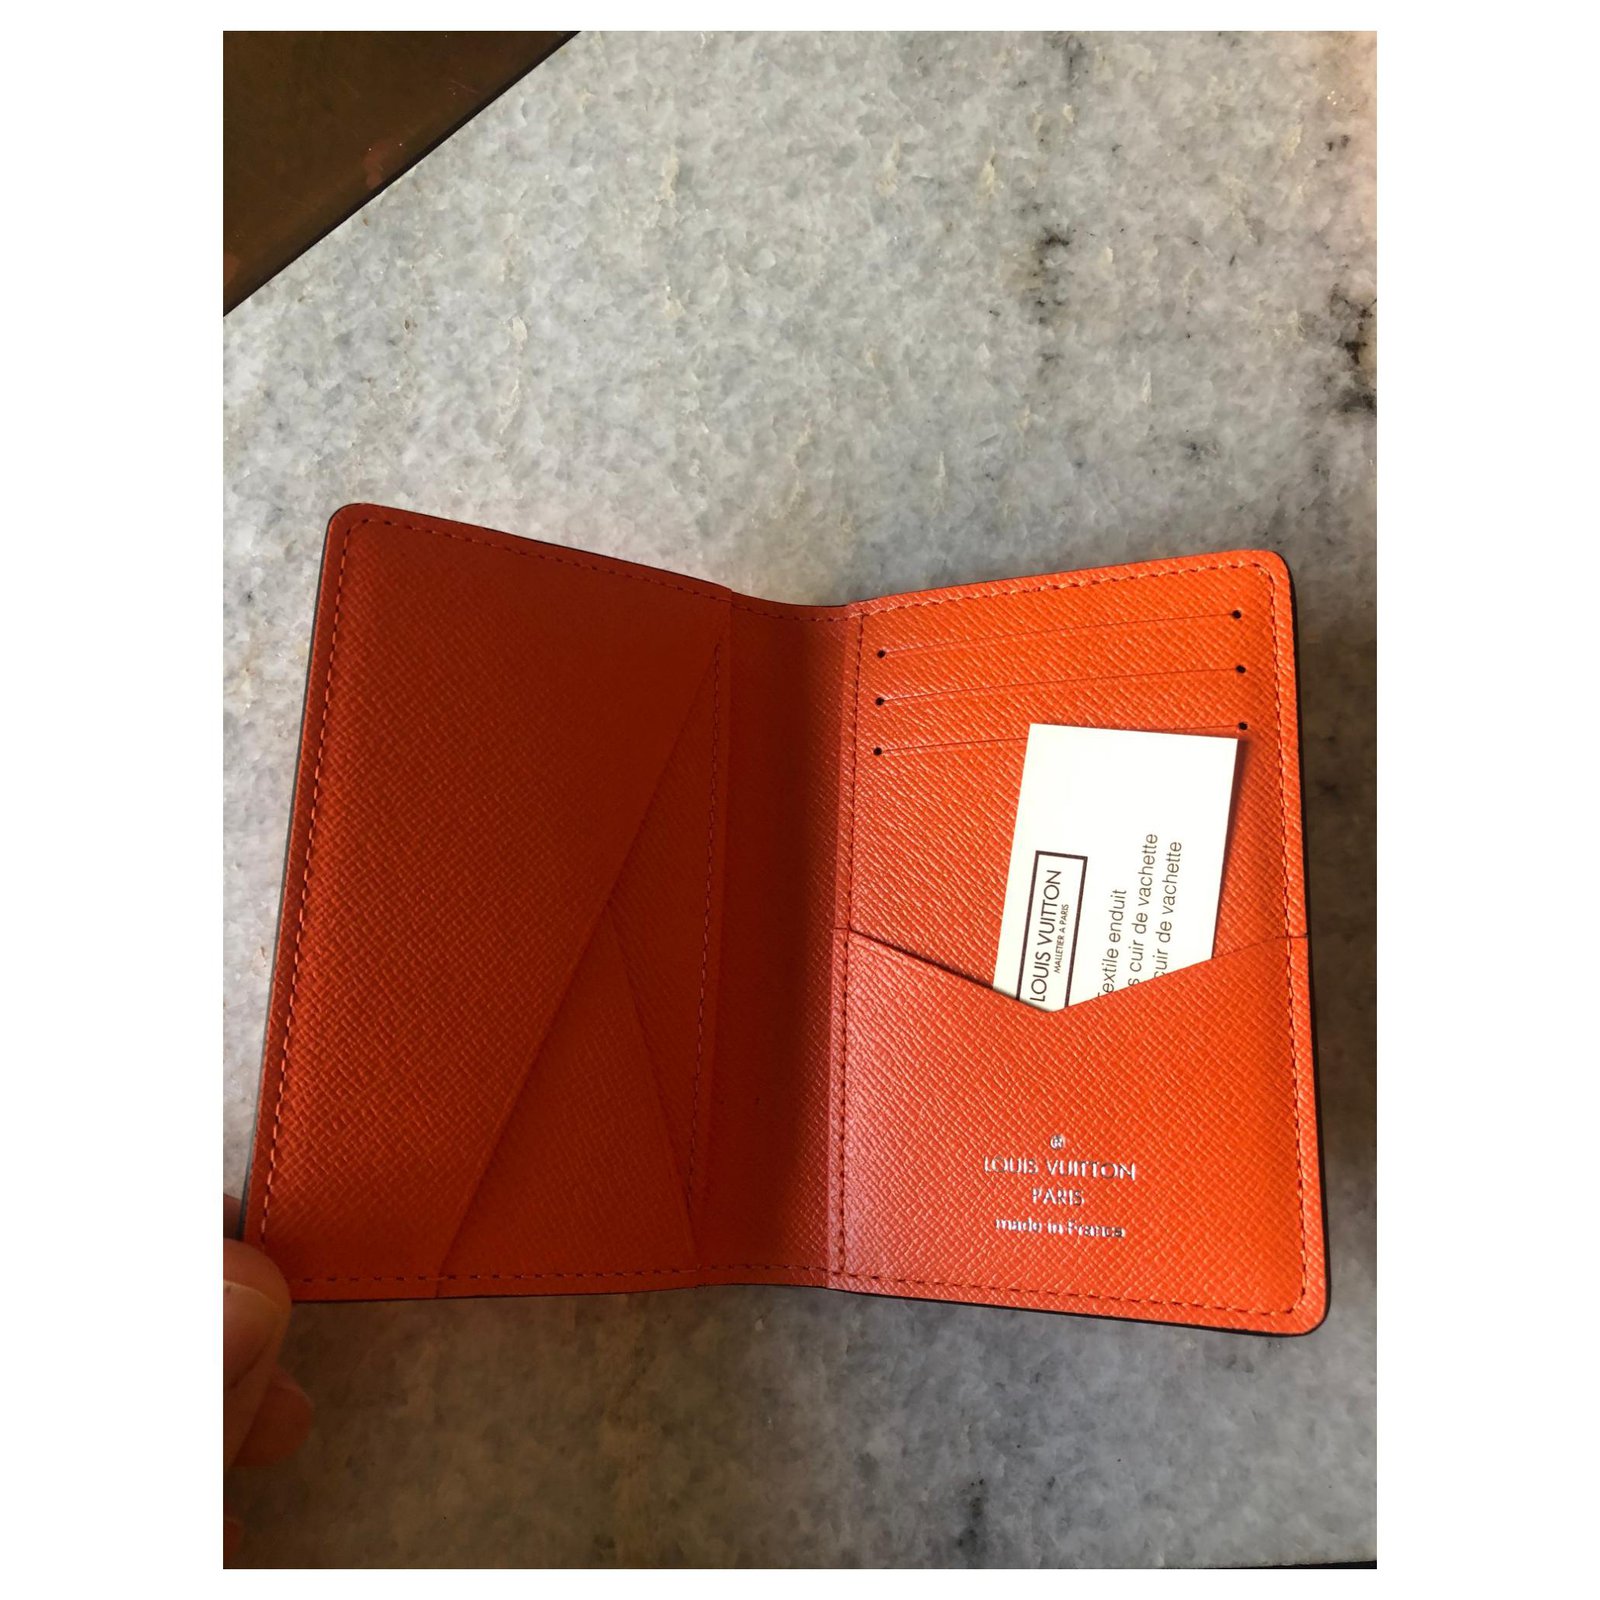 I did it! I got the new pocket organizer + pochette Métis! : r/Louisvuitton